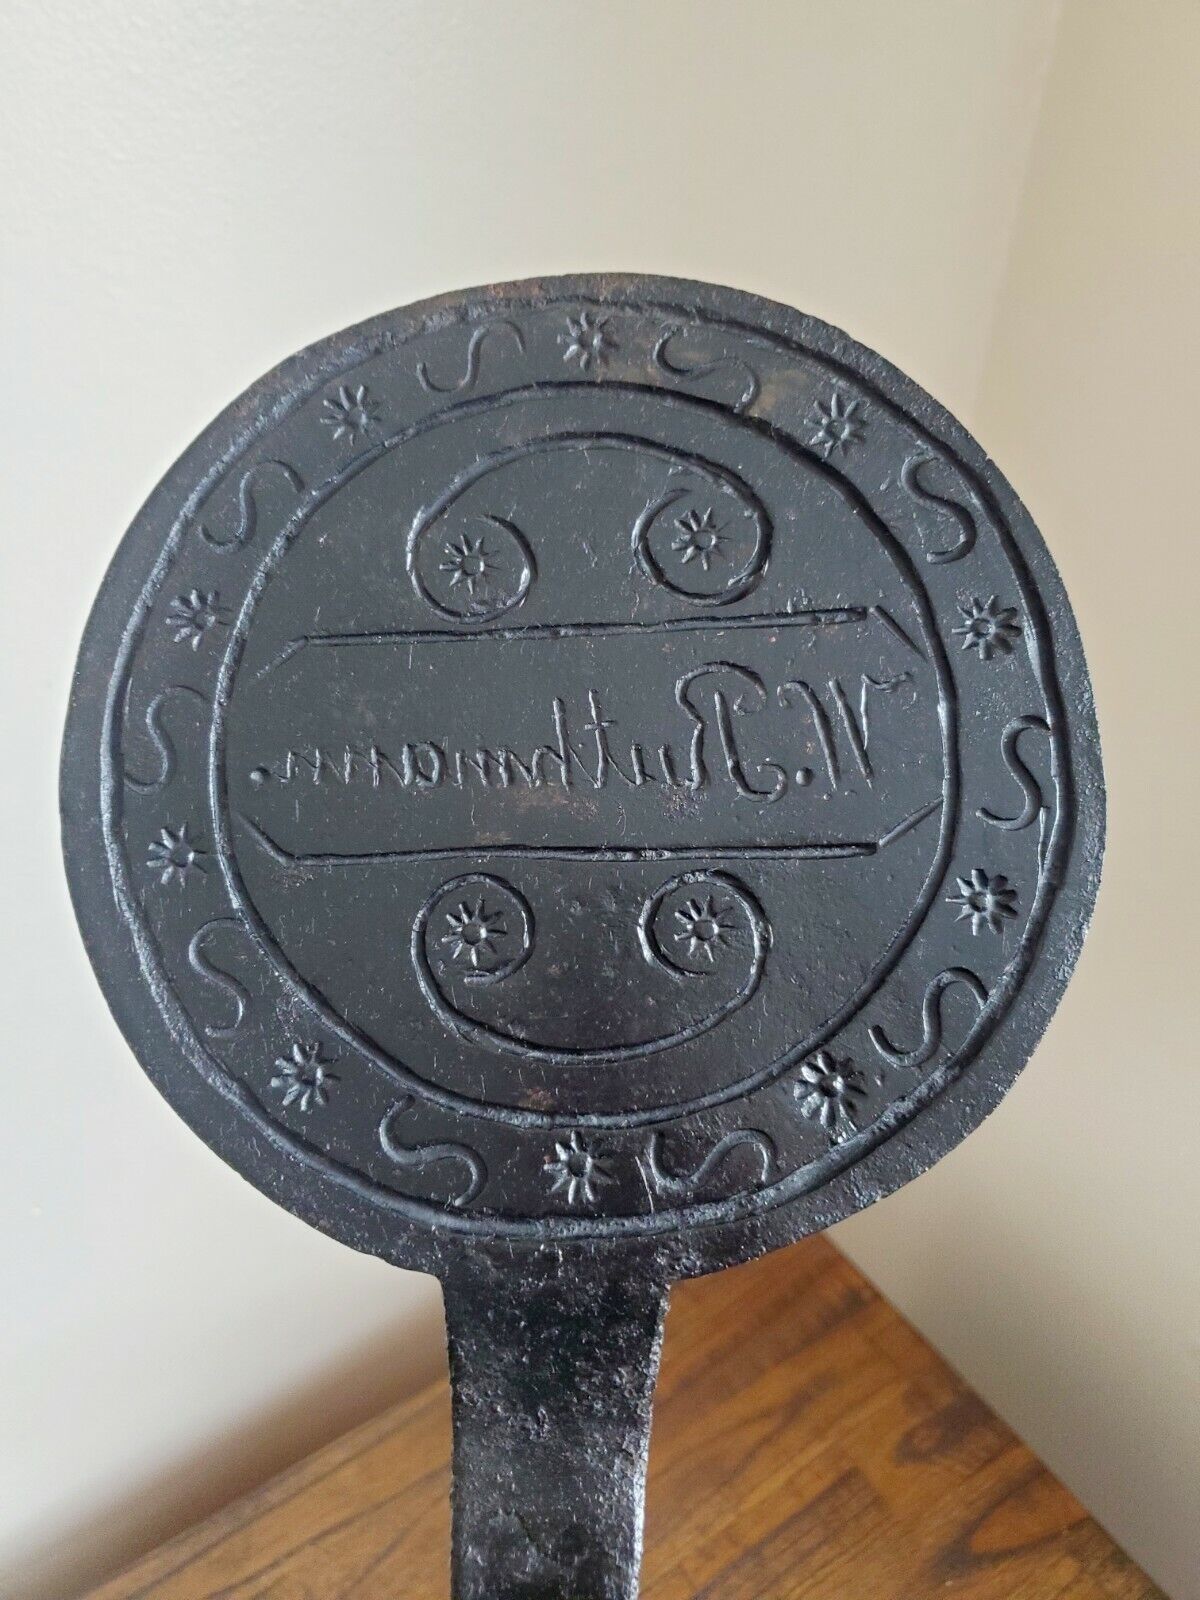 AAFA Early 1800s PA Dutch Pizzelle WAFER Waffle Iron Maker Signed W. Rutthmann